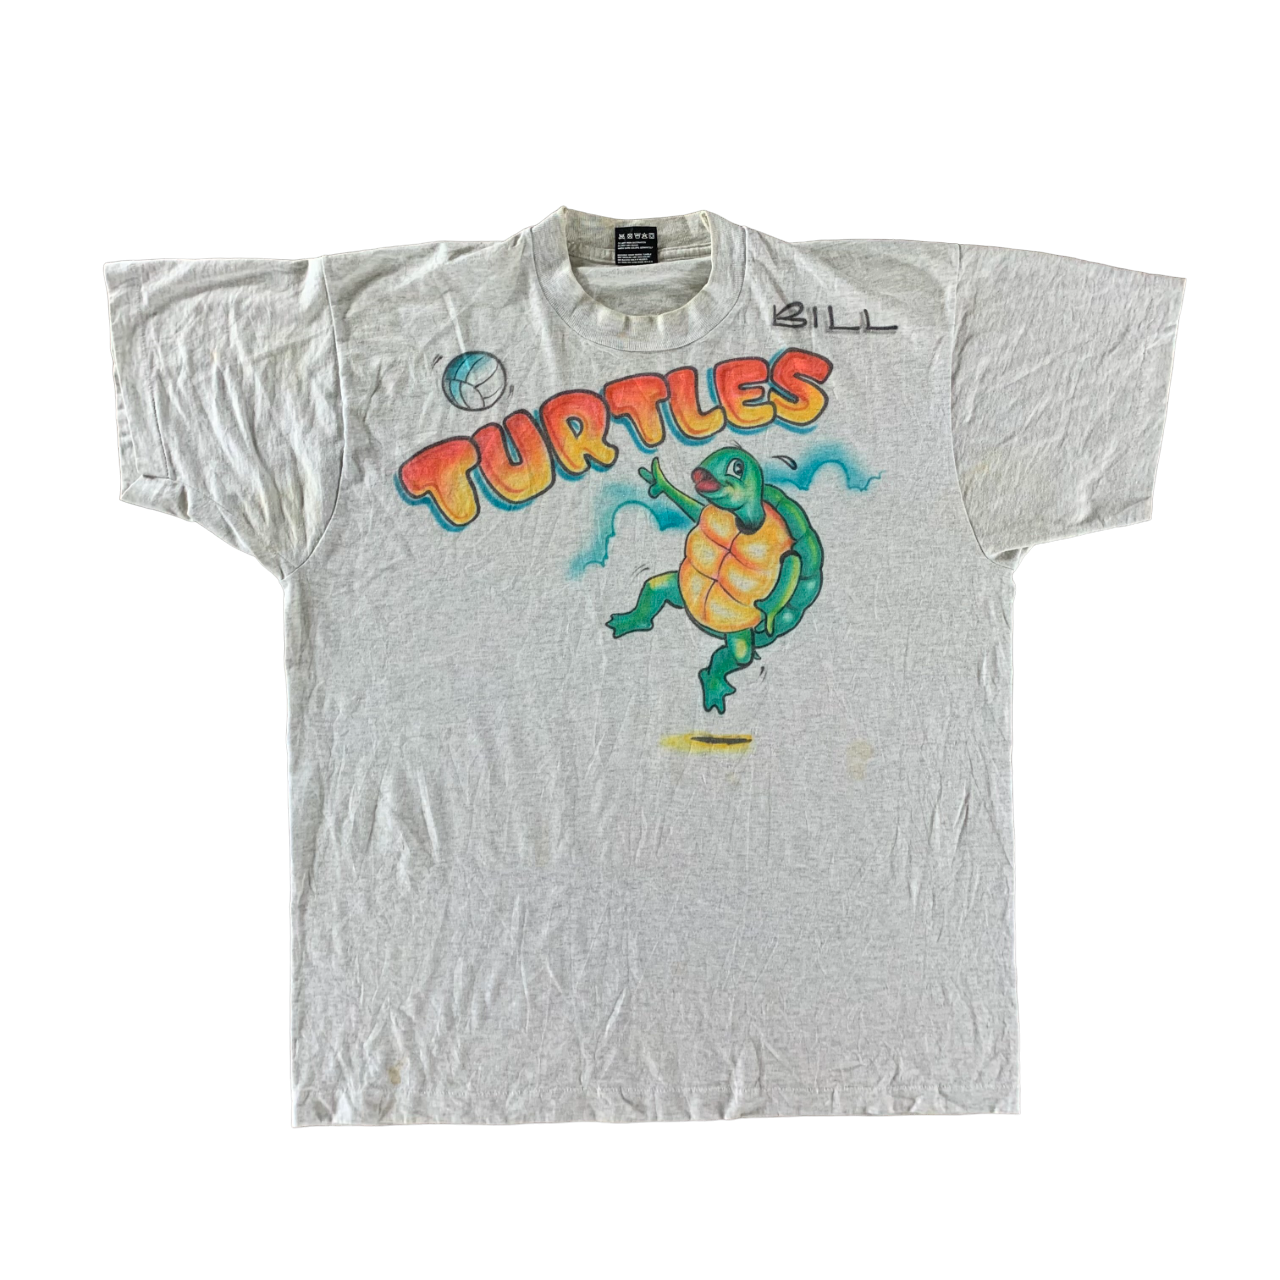 Vintage 1990s Turtle Airbrush T-shirt size XL